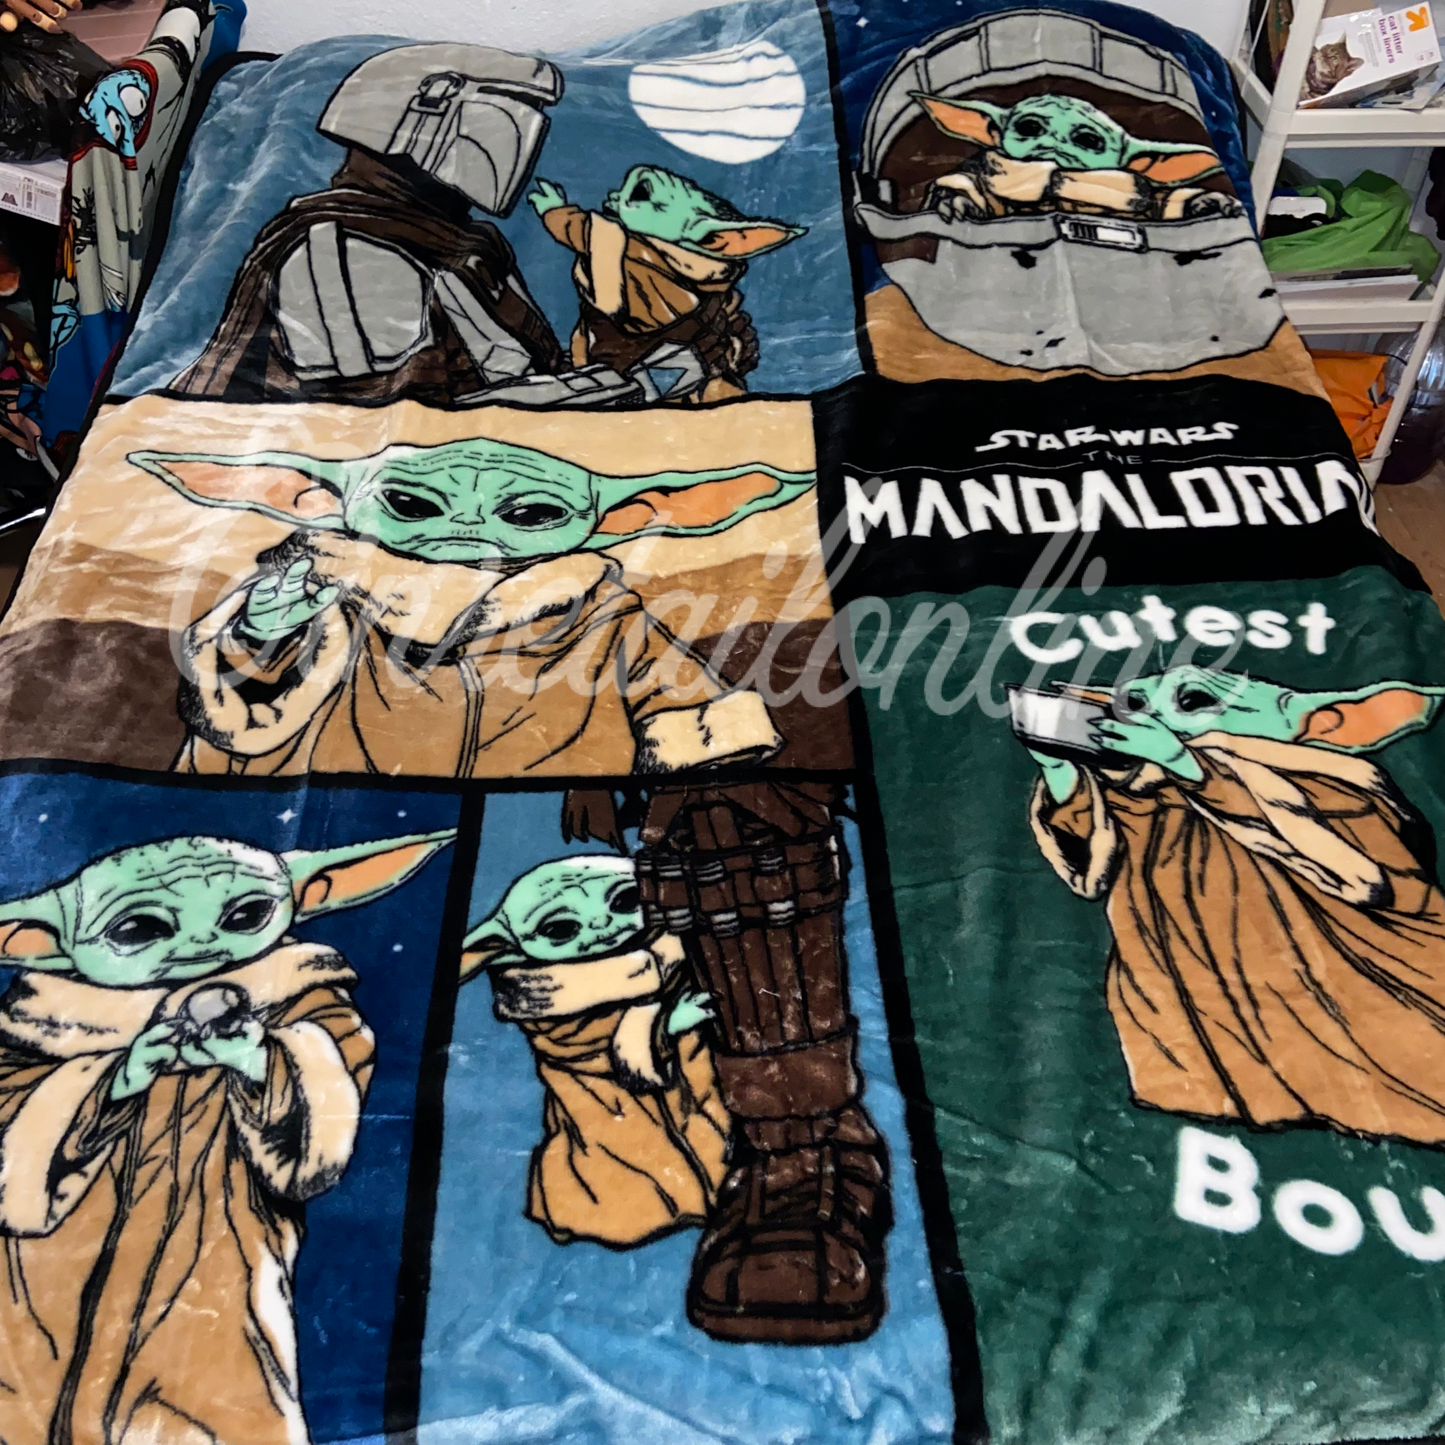 The Mandalorian (baby yoda) blankets